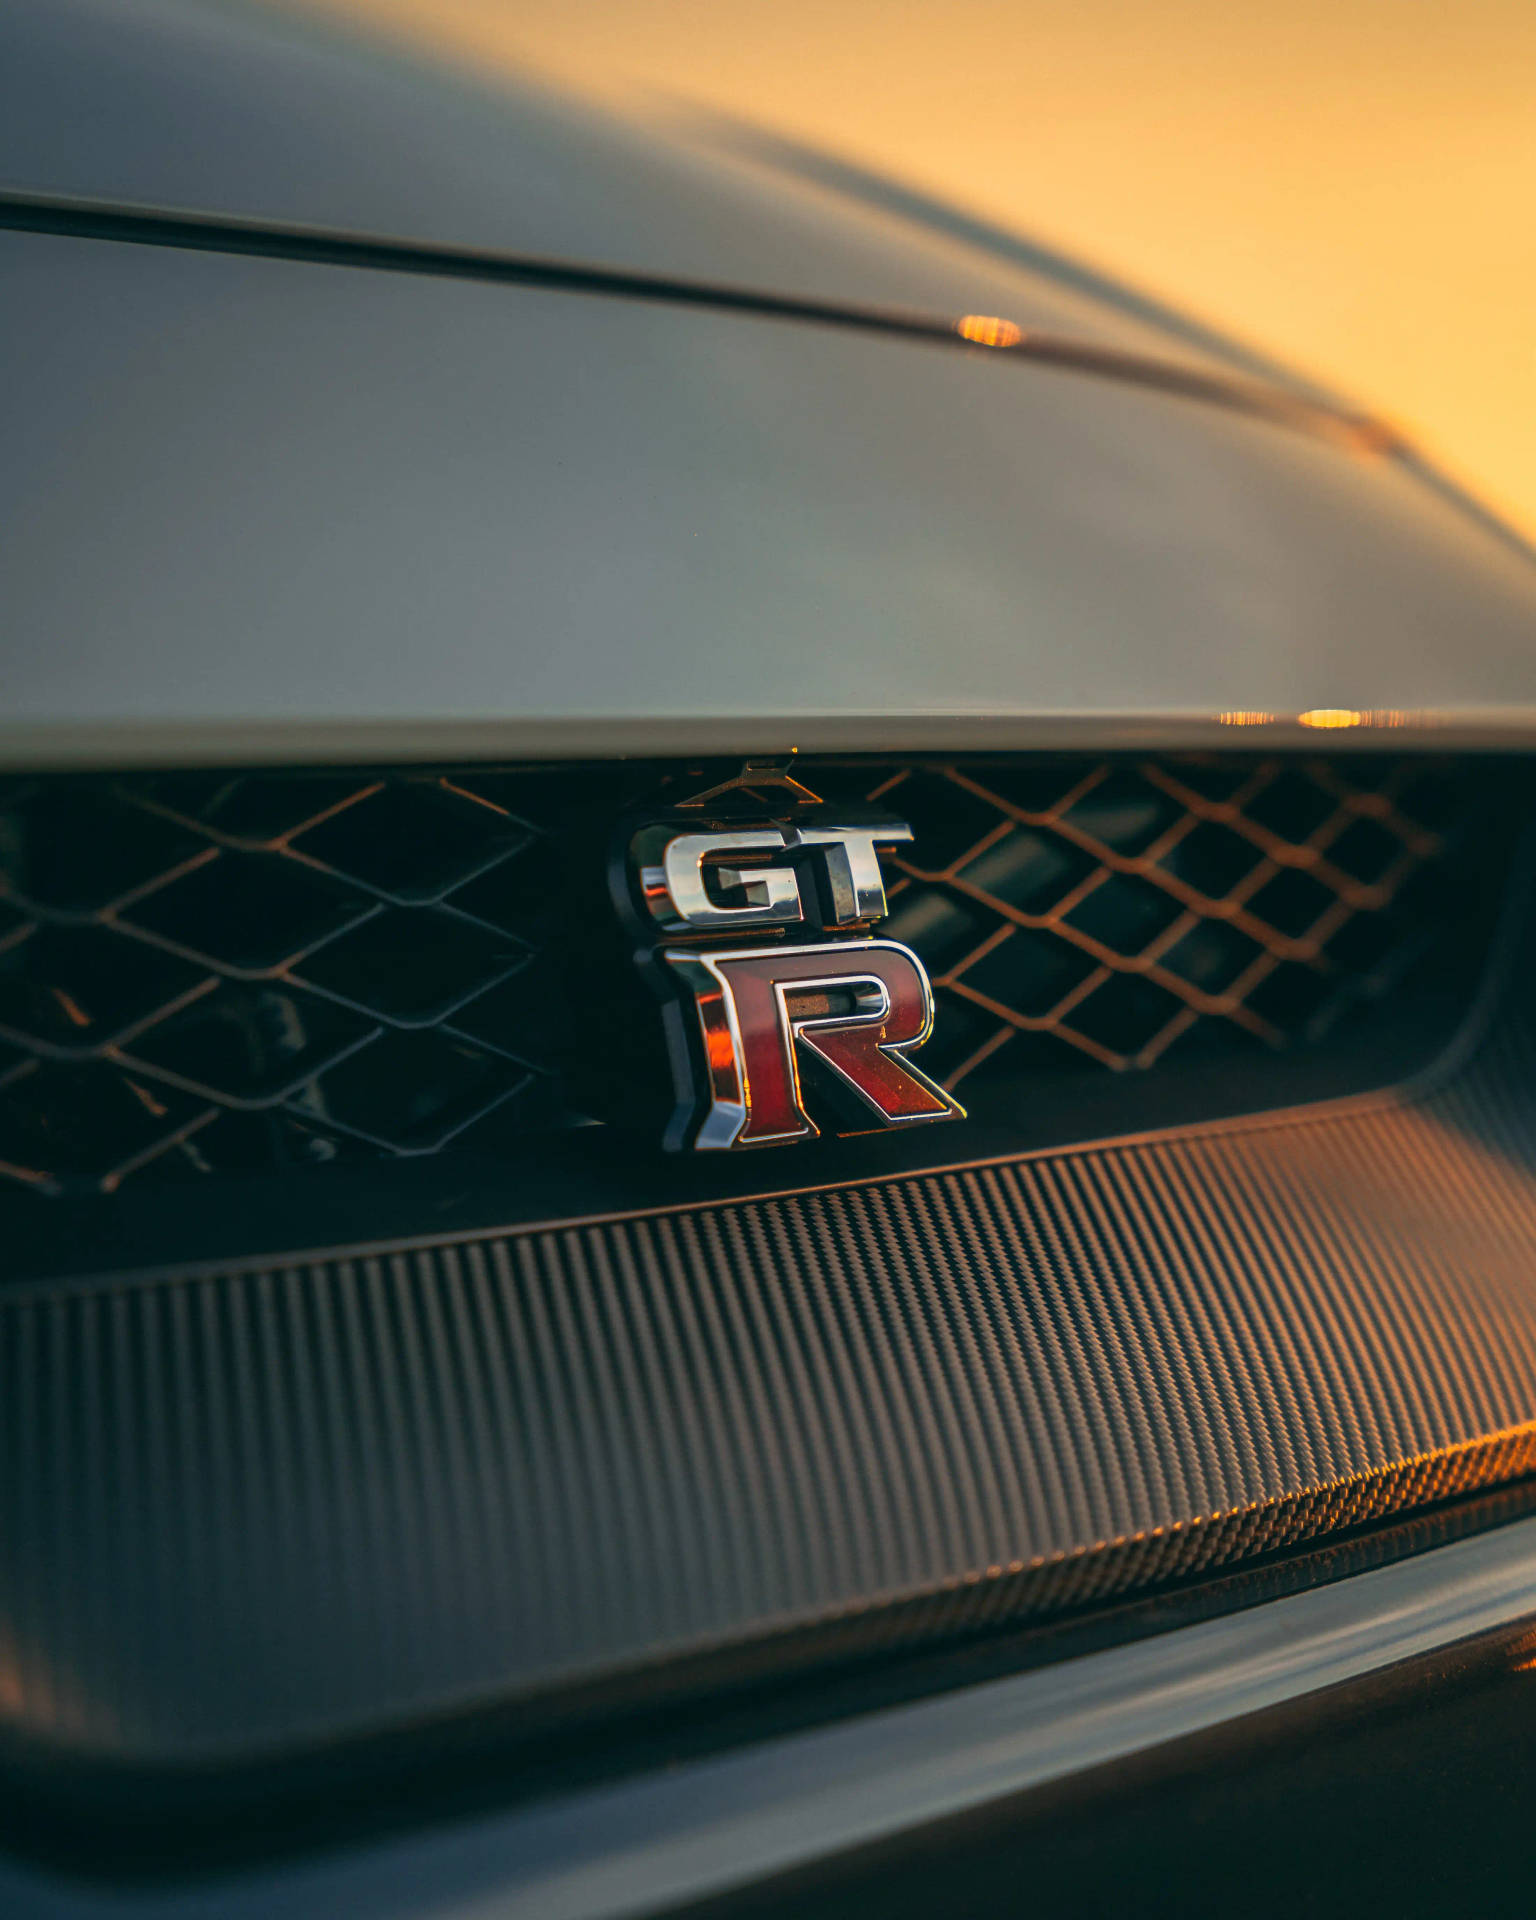 Exquisite GTR Car flaunting its elegant logo. Wallpaper